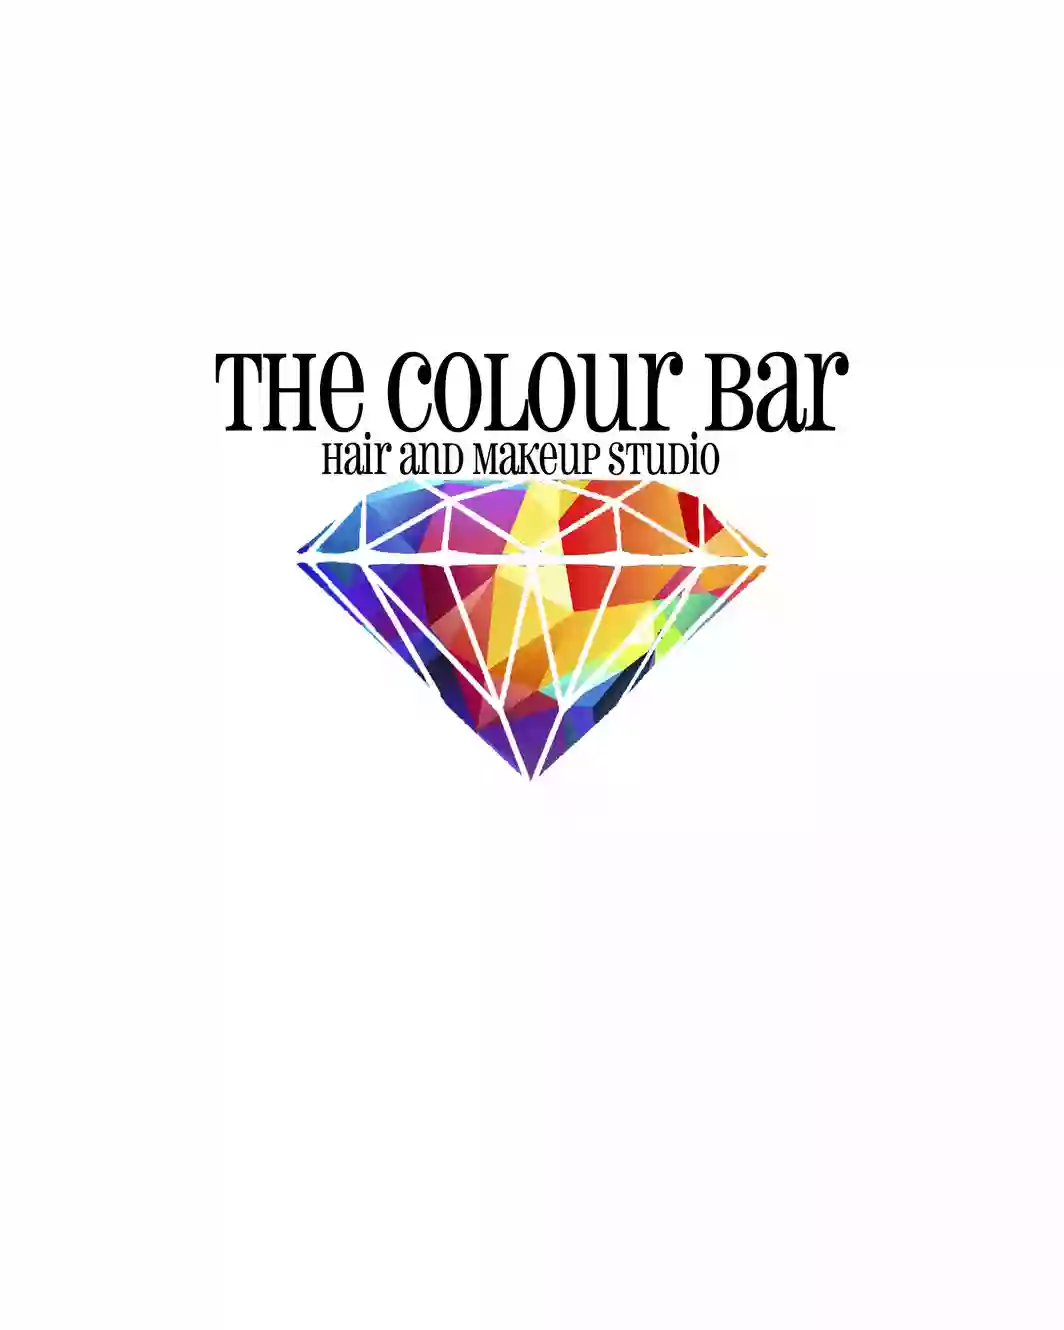 The Colour Bar Hair and Makeup Studio